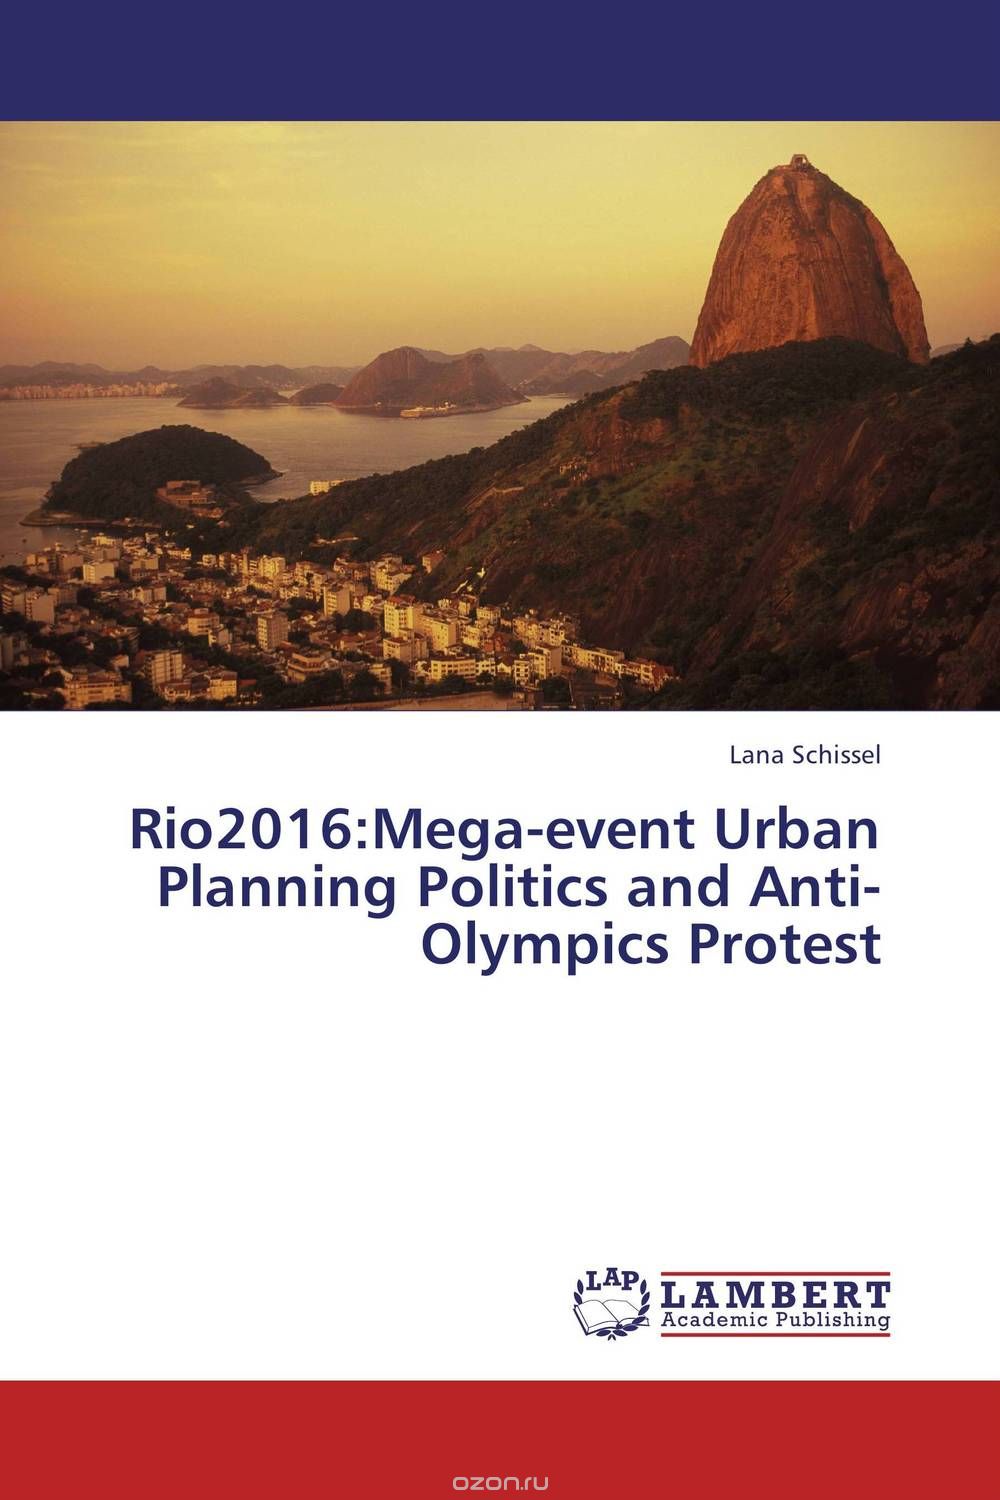 Скачать книгу "Rio2016:Mega-event Urban Planning Politics and Anti-Olympics Protest"